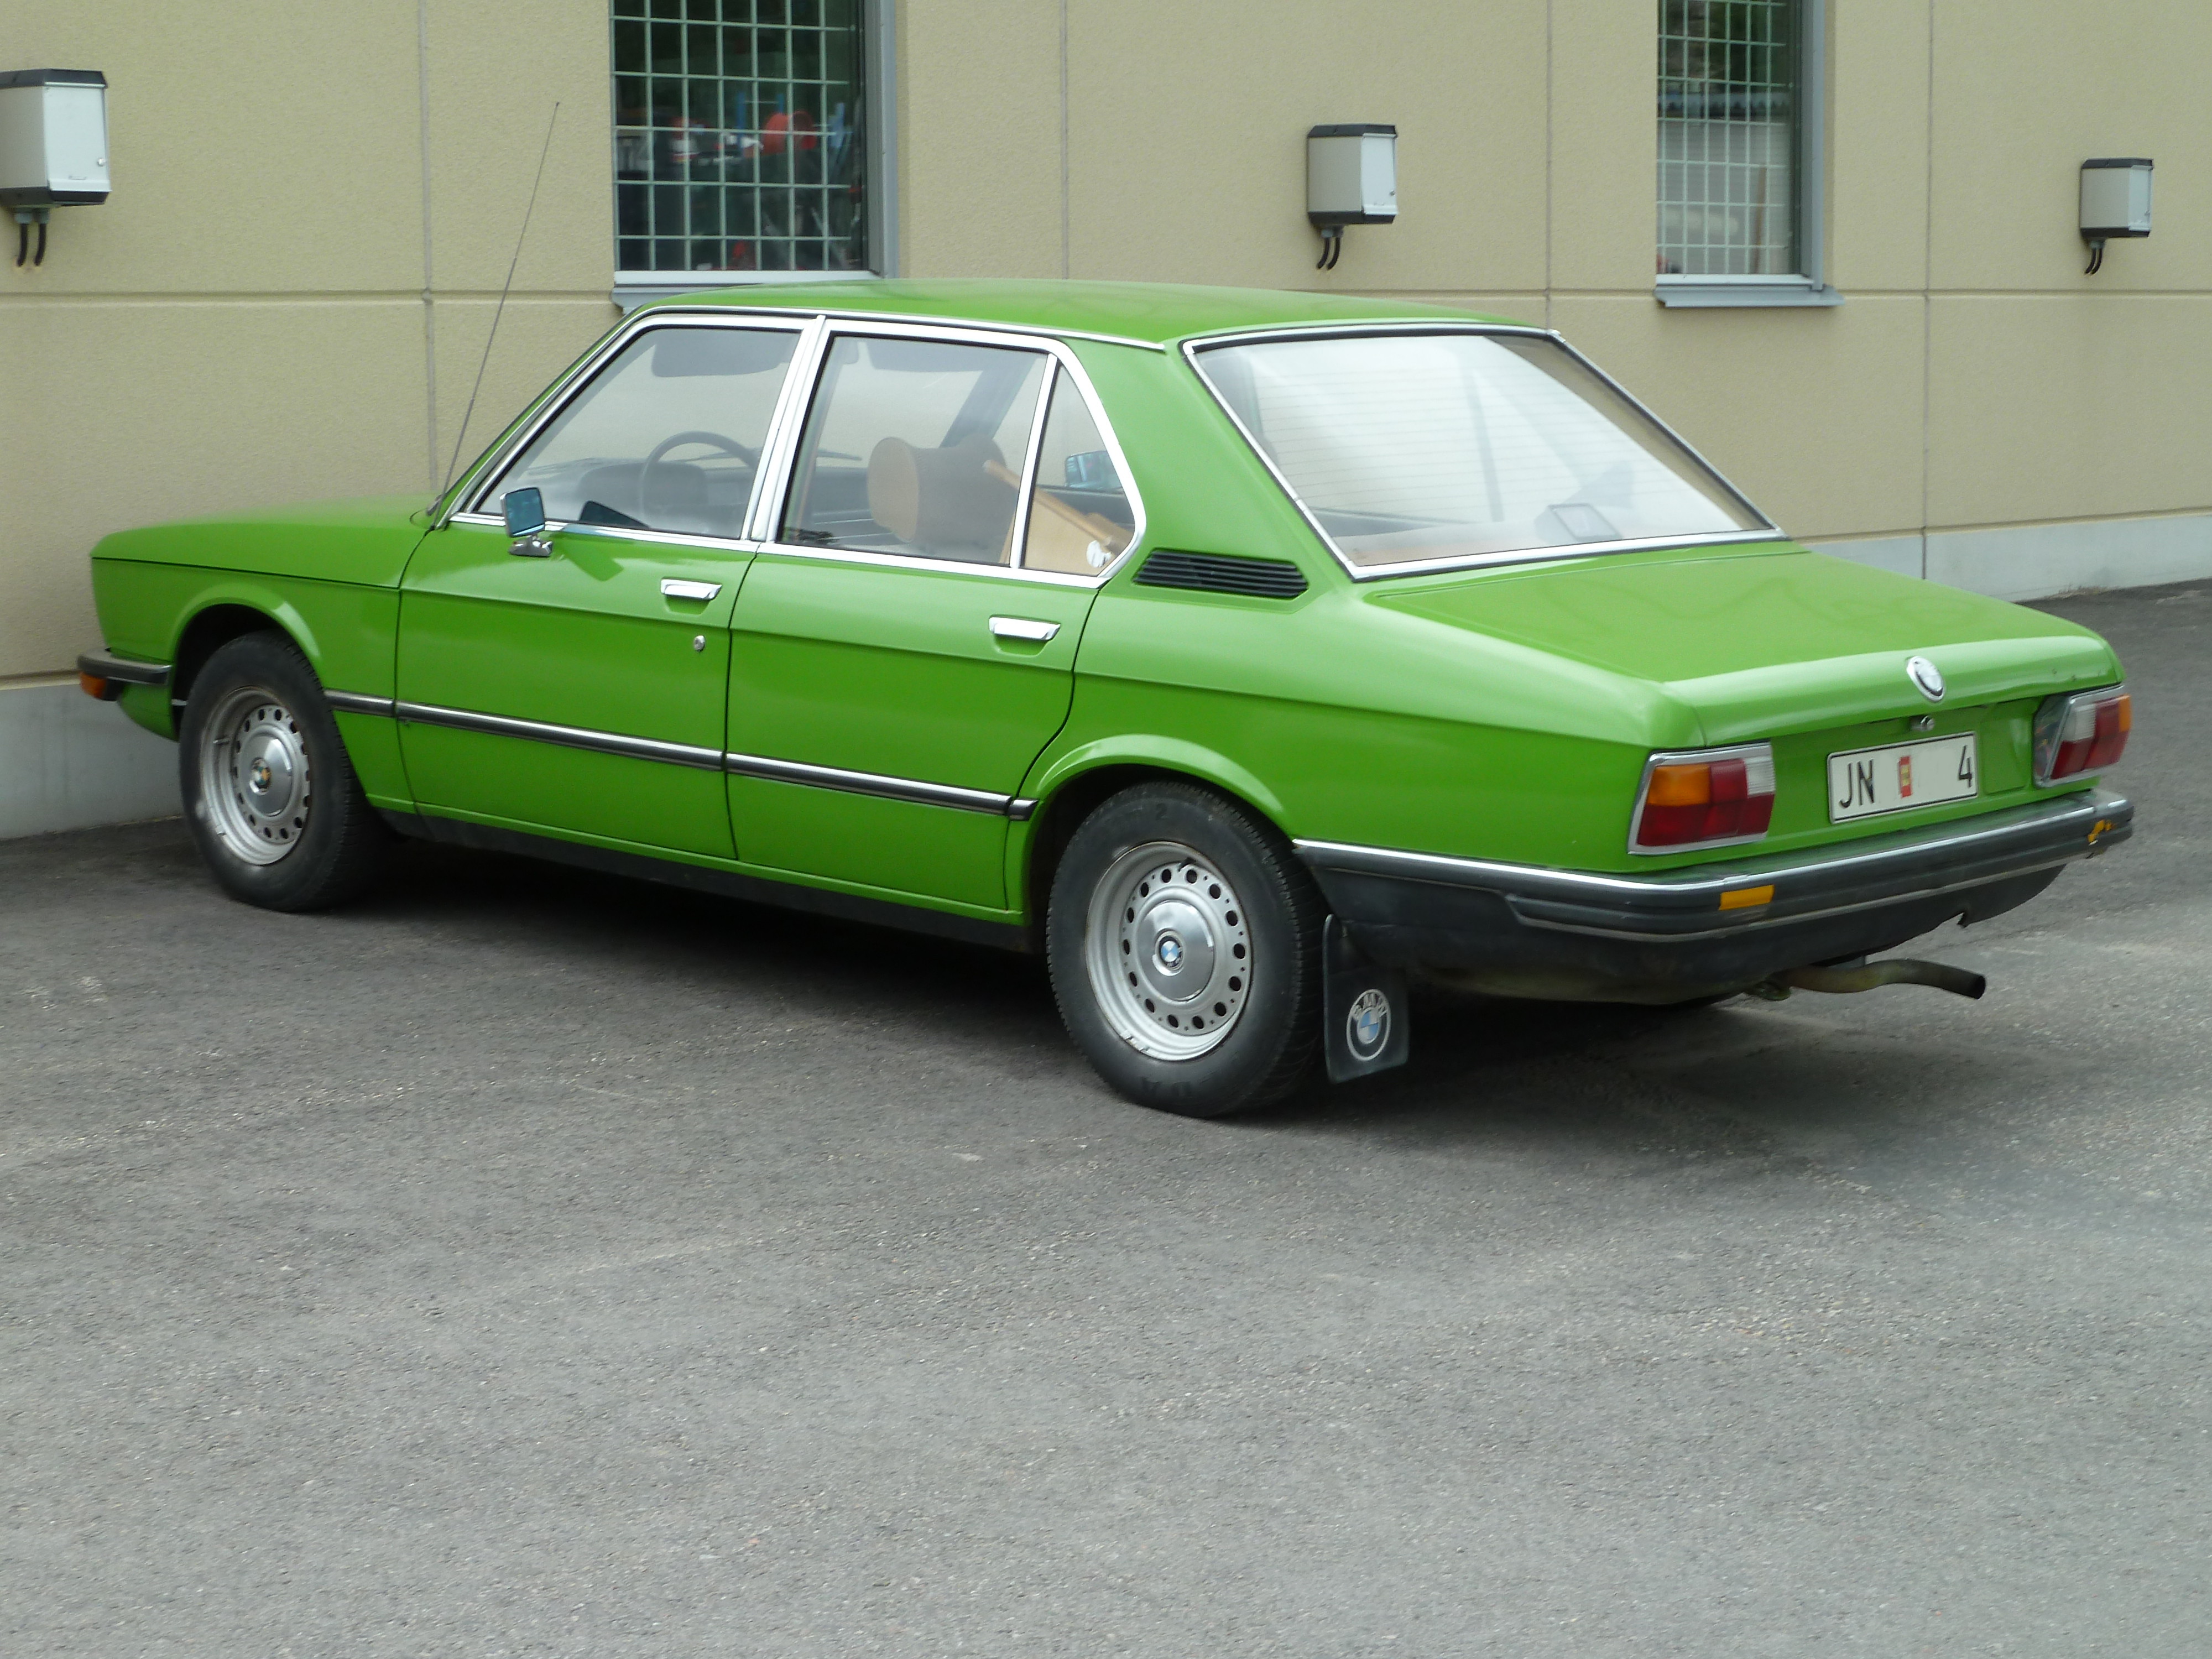 BMW 518 1975 | Flickr - Photo Sharing!